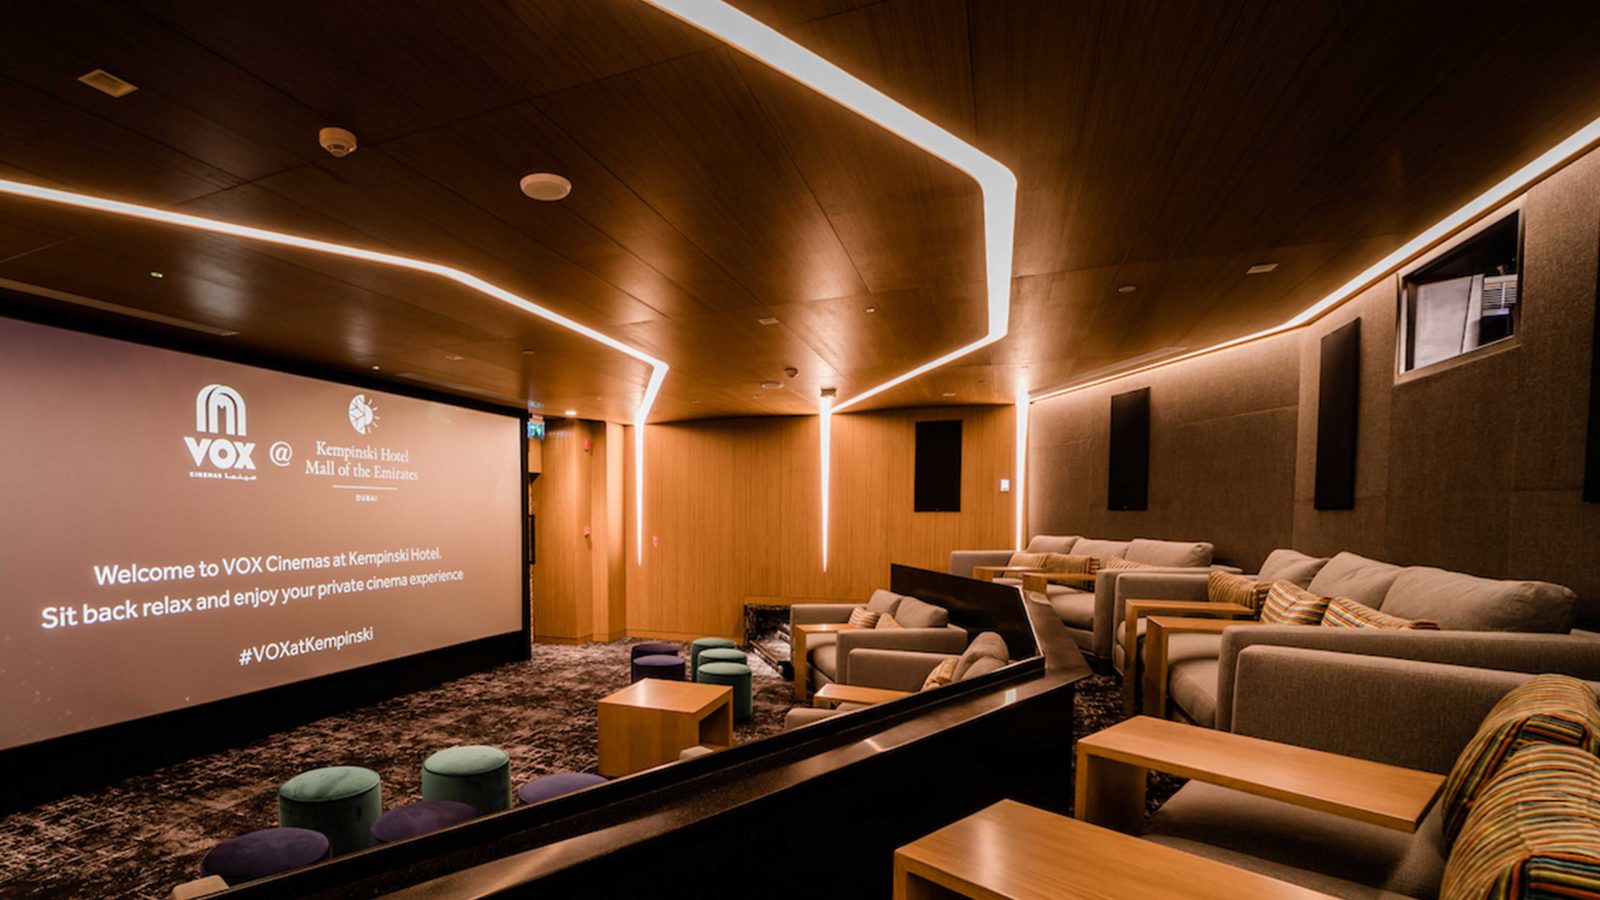 Architectural Lighting Design Recessed Linear Illumination Wall Ceiling Feature Private Luxury Cinema Dubai Studio N